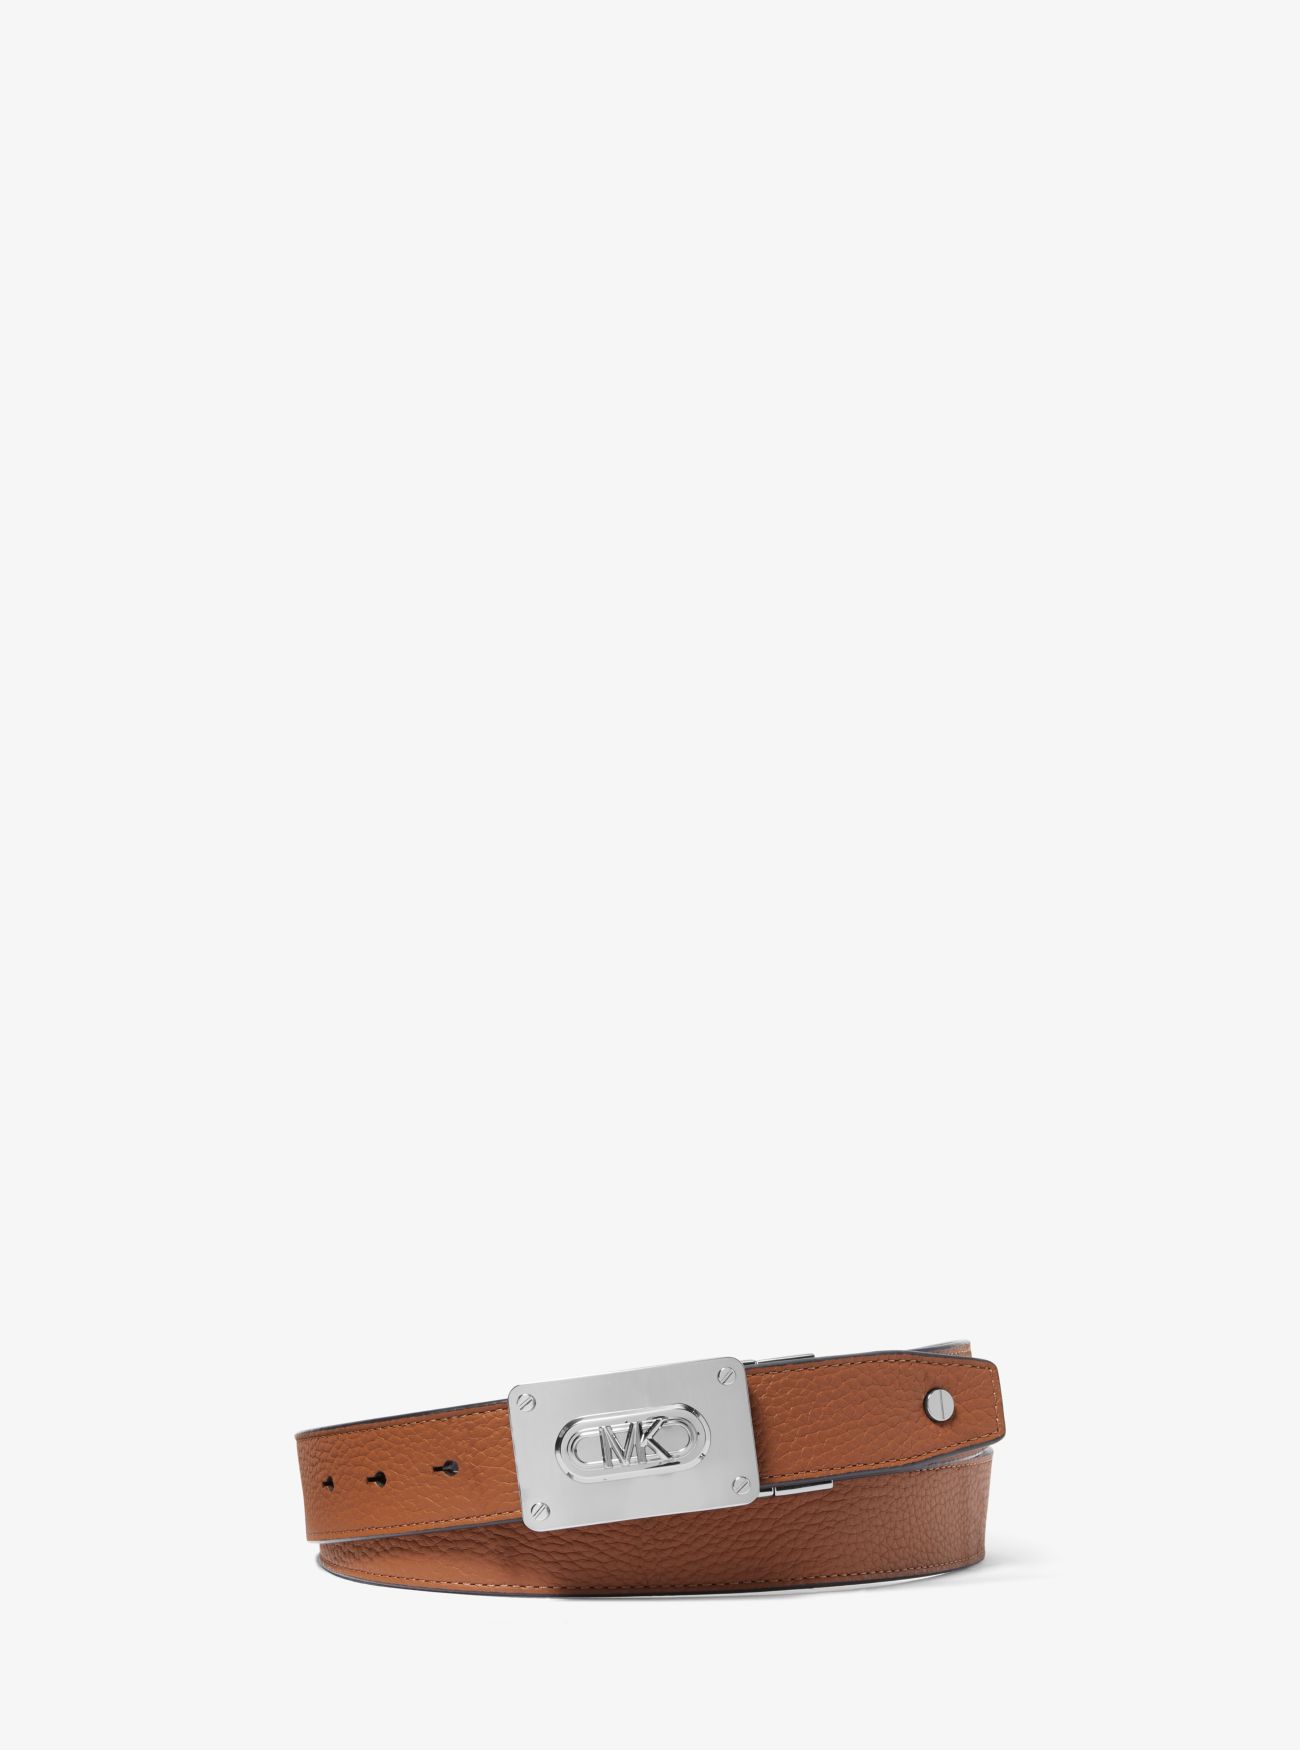 MK Reversible Logo and Leather Belt - Brown - Michael Kors